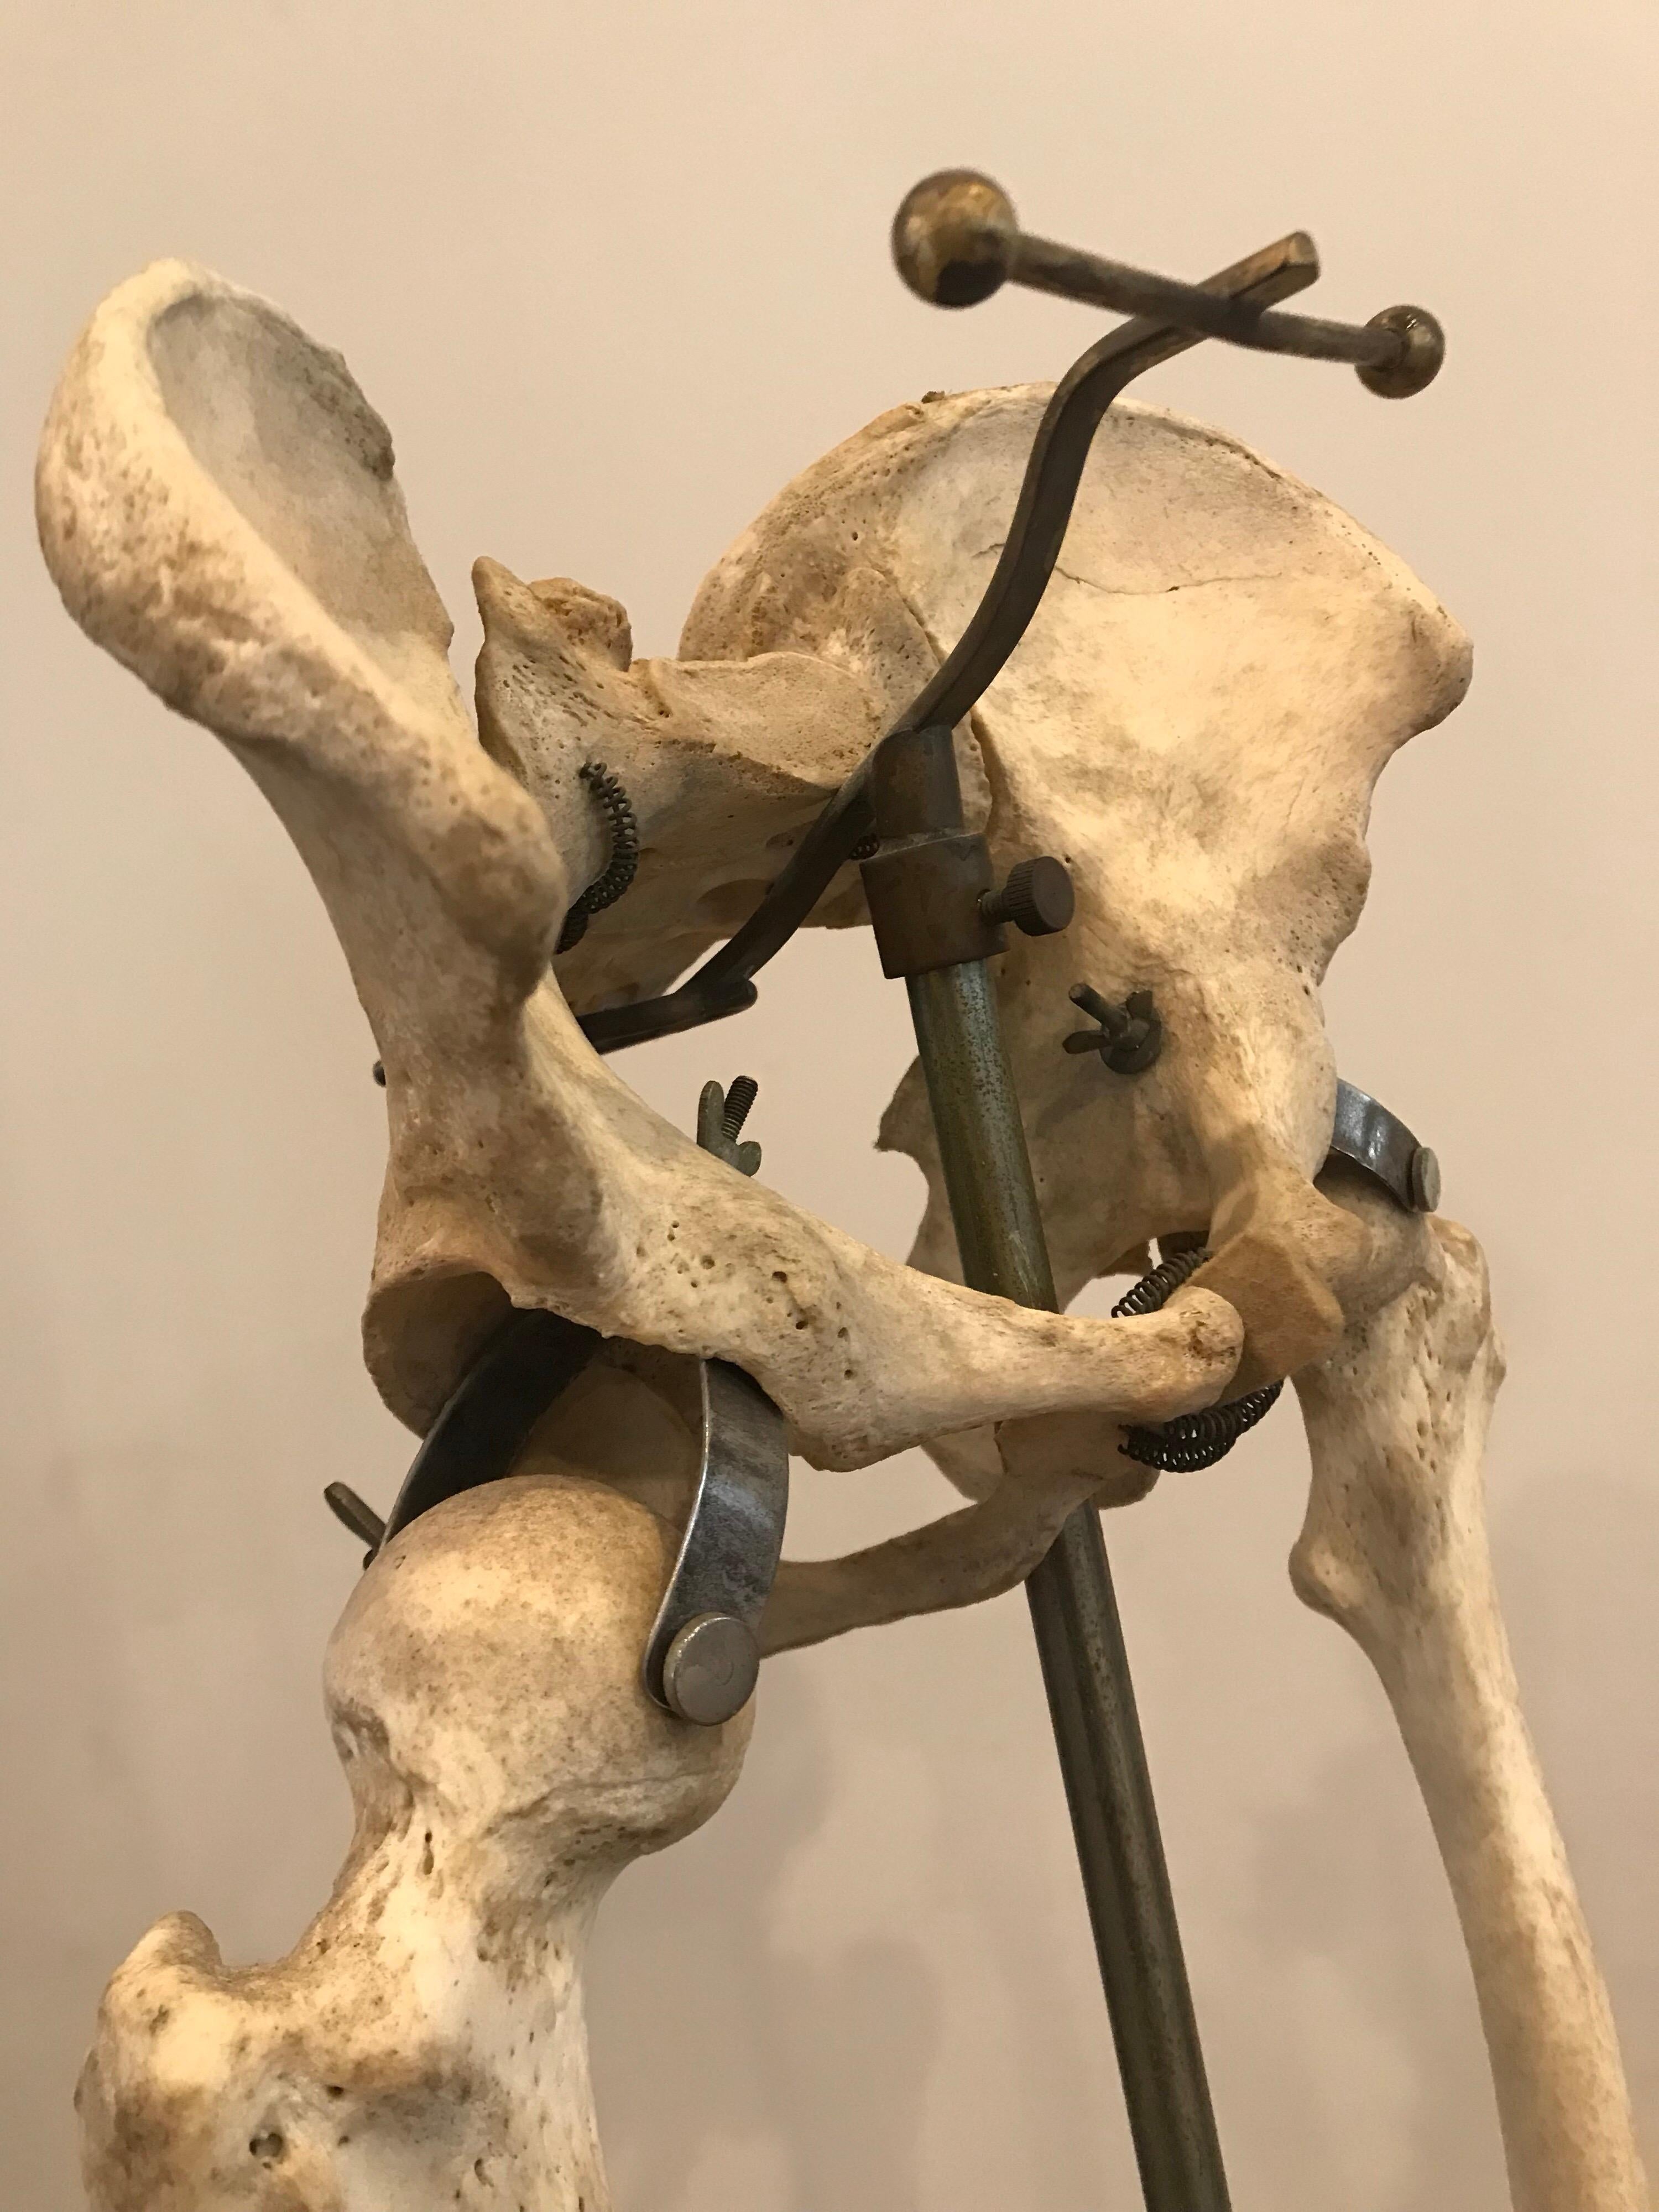 American Real Human Skeleton of Articulating Lower Extremities Leg & Foot Bones on Stand